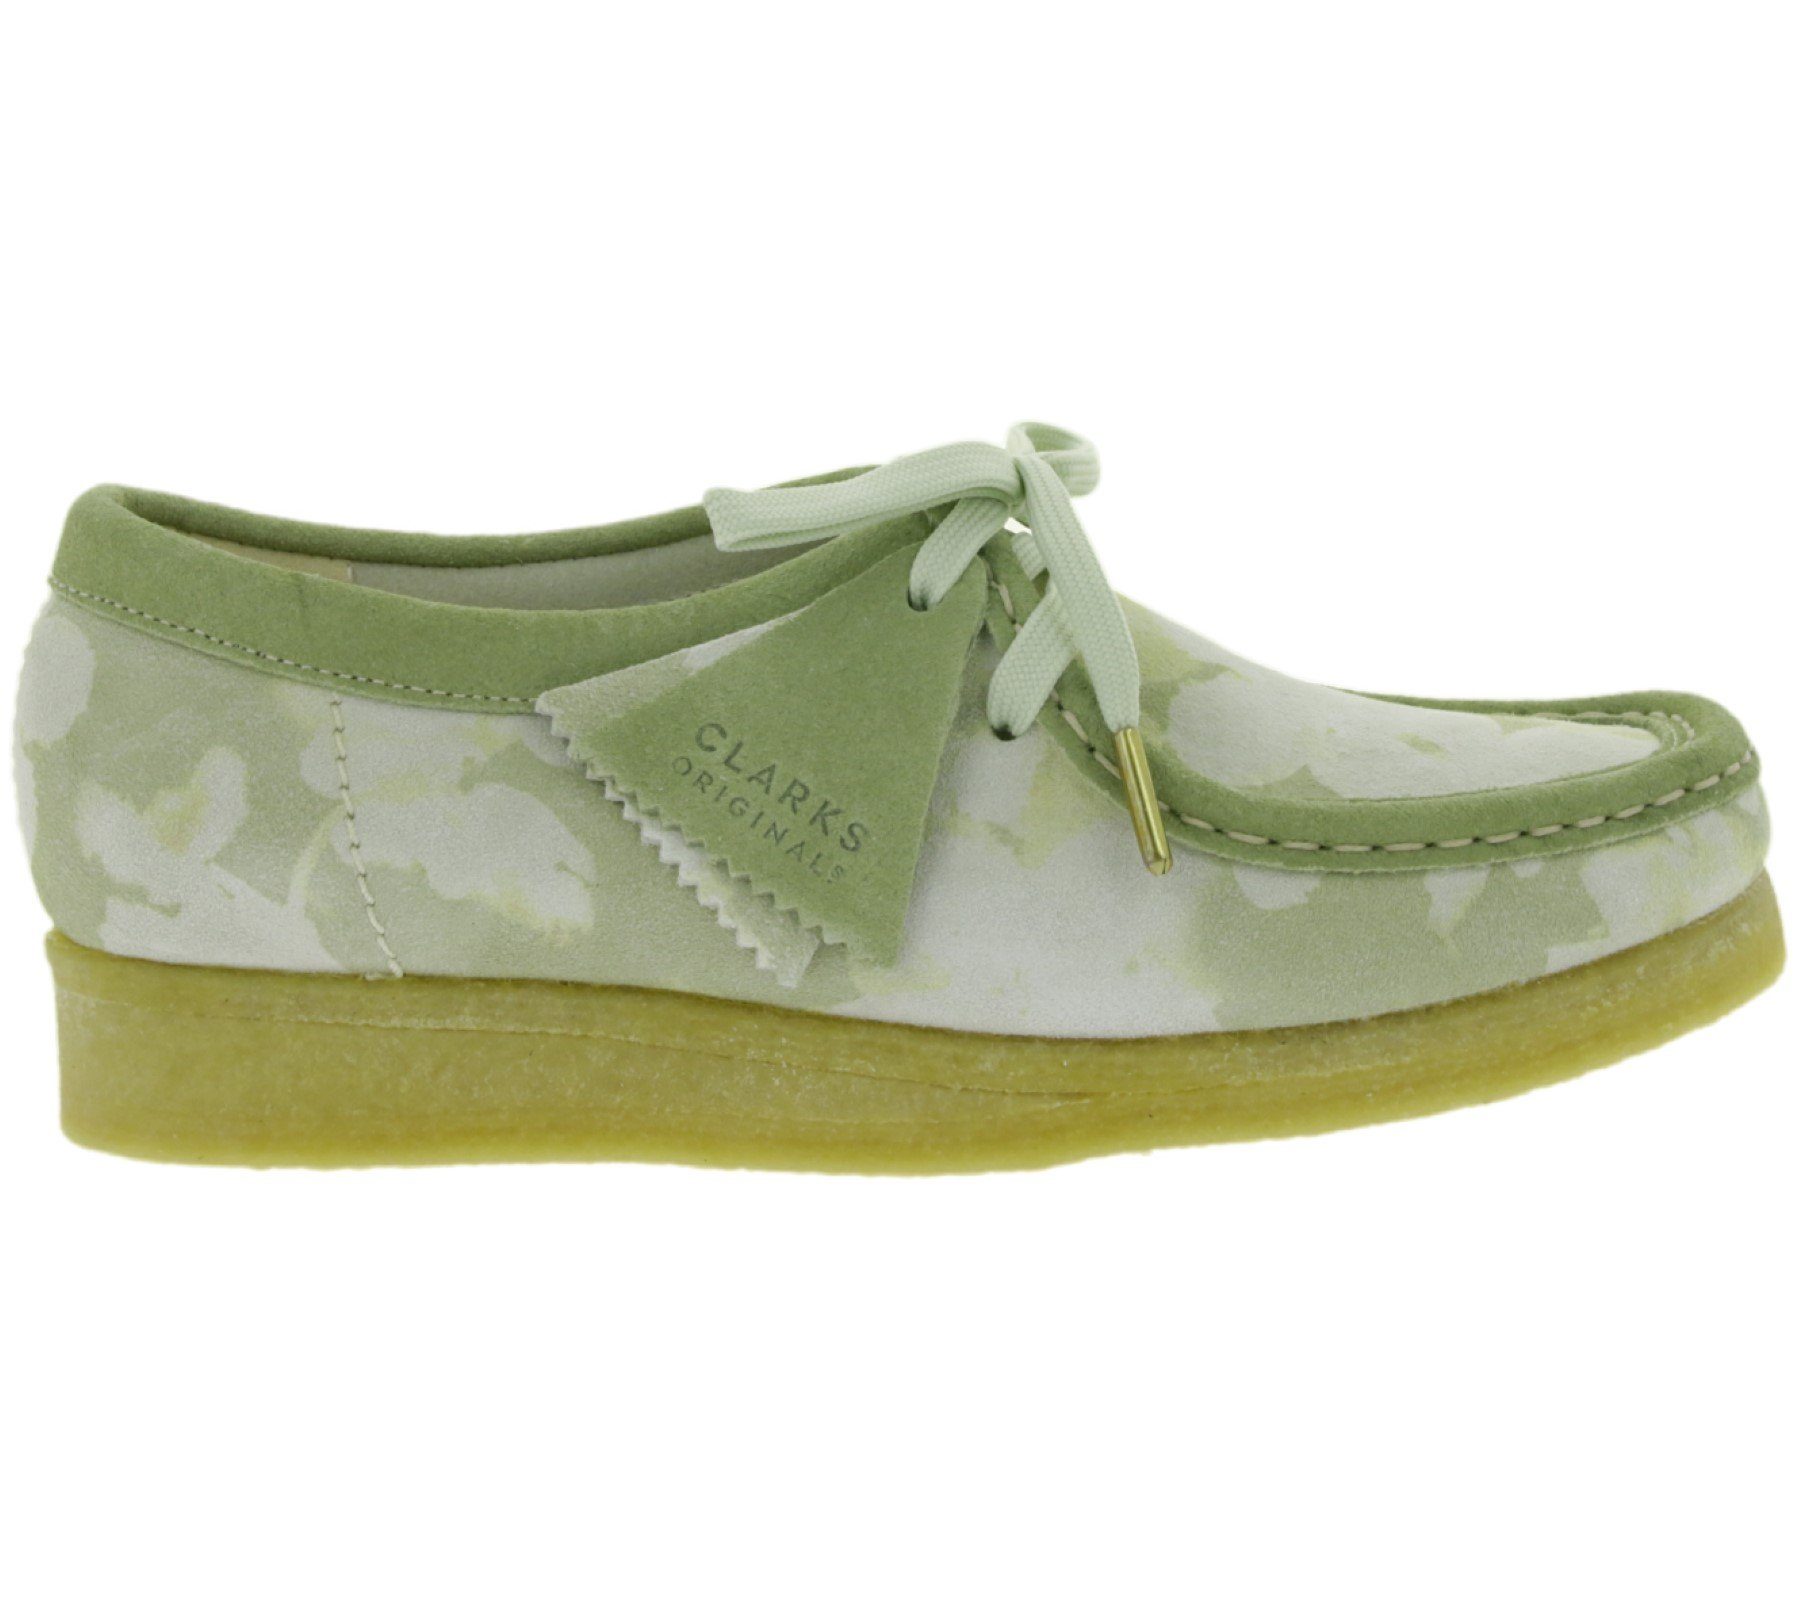 Clarks Clarks Originals Damen Schnürschuhe Grün Halbschuhe Echtleder-Bootsschuhe floralem Muster Schnürschuh Wallabee mit